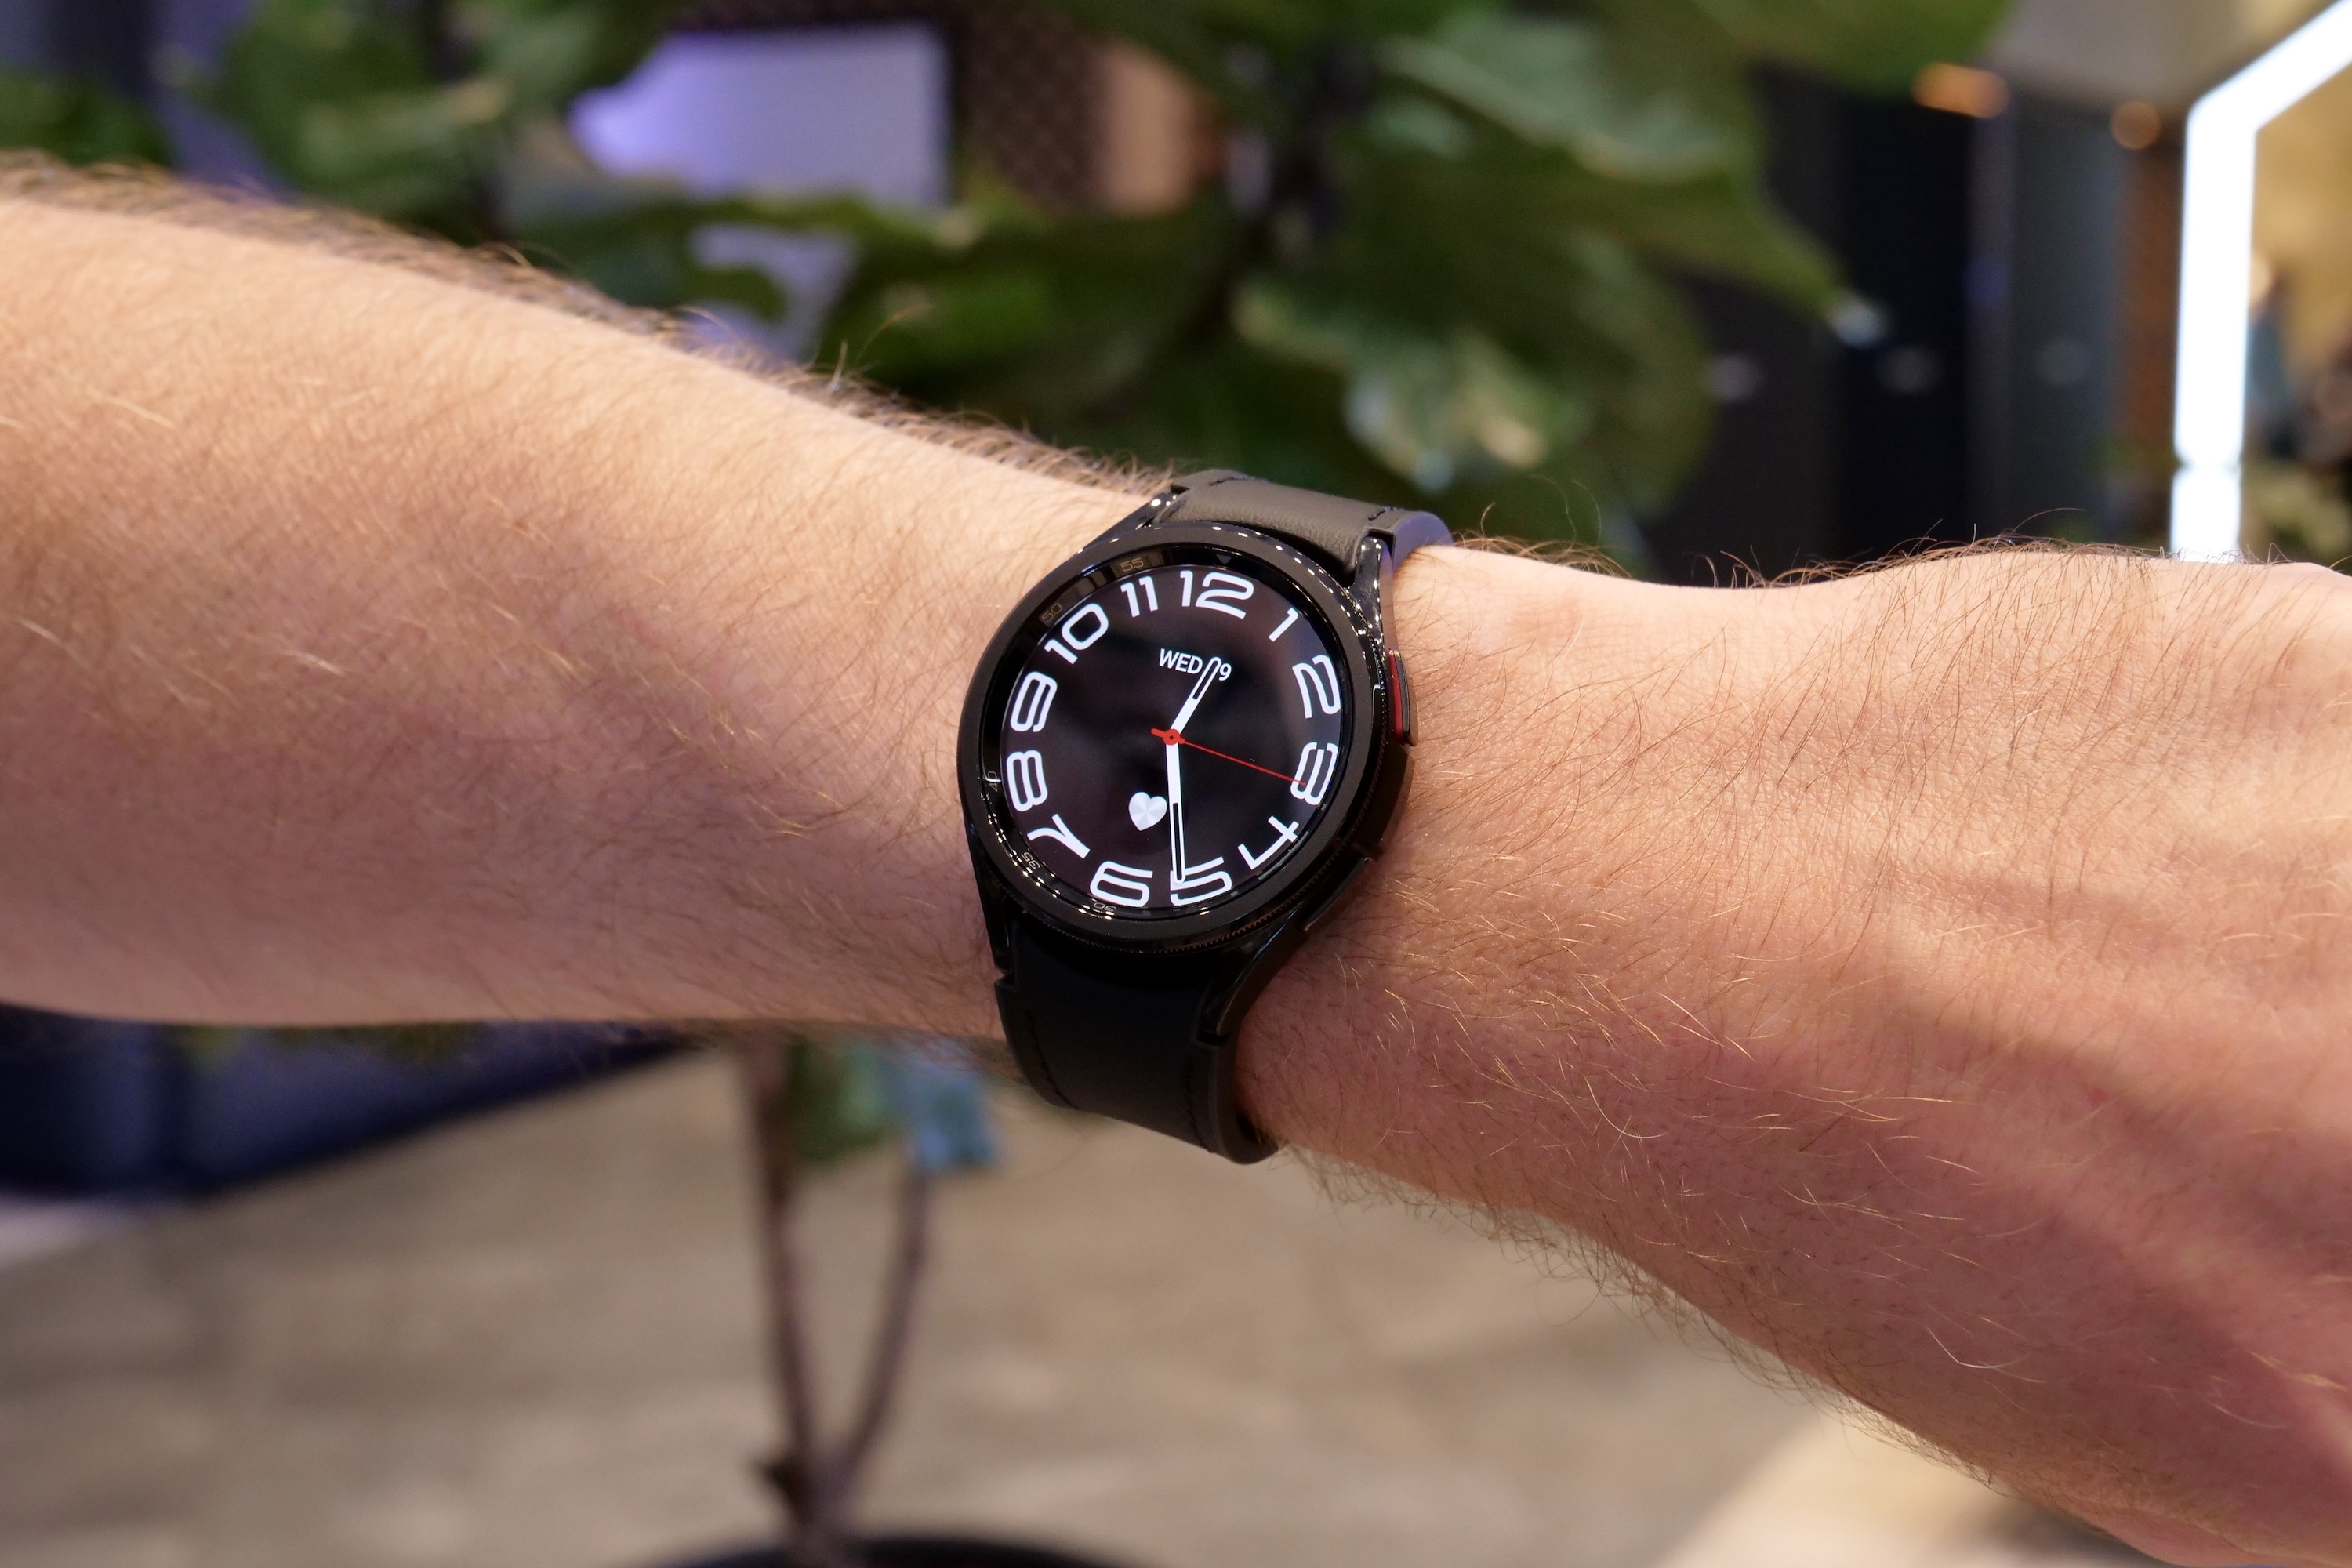 The 43mm Samsung Galaxy Watch Classic in black.